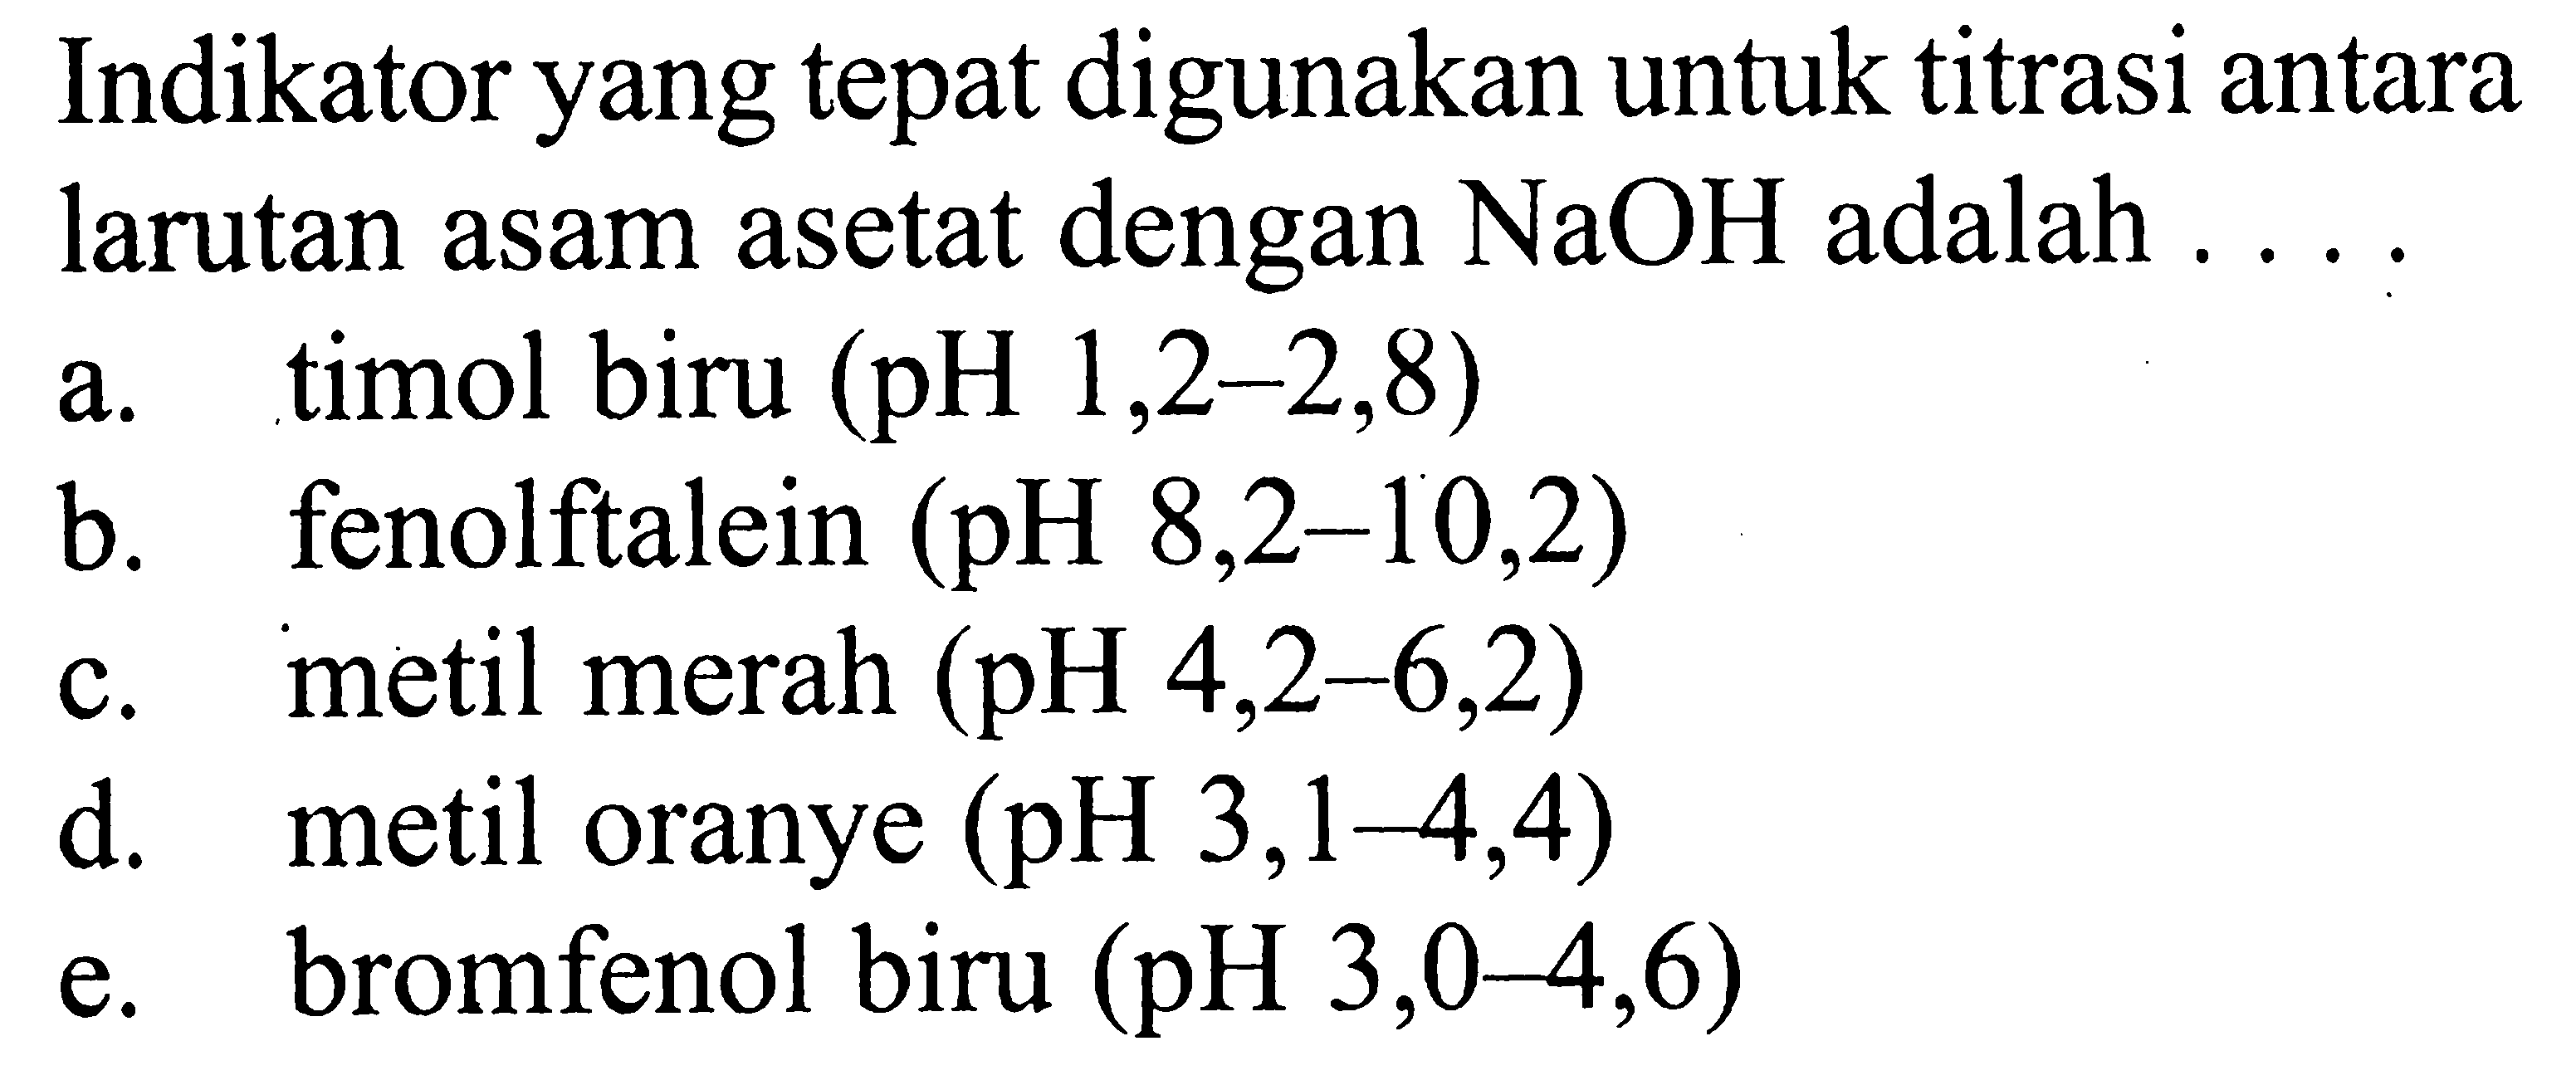 Indikator yang tepat digunakan untuk titrasi antara larutan asam asetat dengan NaOH adalah ....a. timol biru (pH 1,2-2,8) b. fenolftalein (pH 8,2-10,2) c. metil merah (pH 4,2-6,2) d. metil oranye (pH 3,1-4,4) e. bromfenol biru (pH  3,0-4,6  )